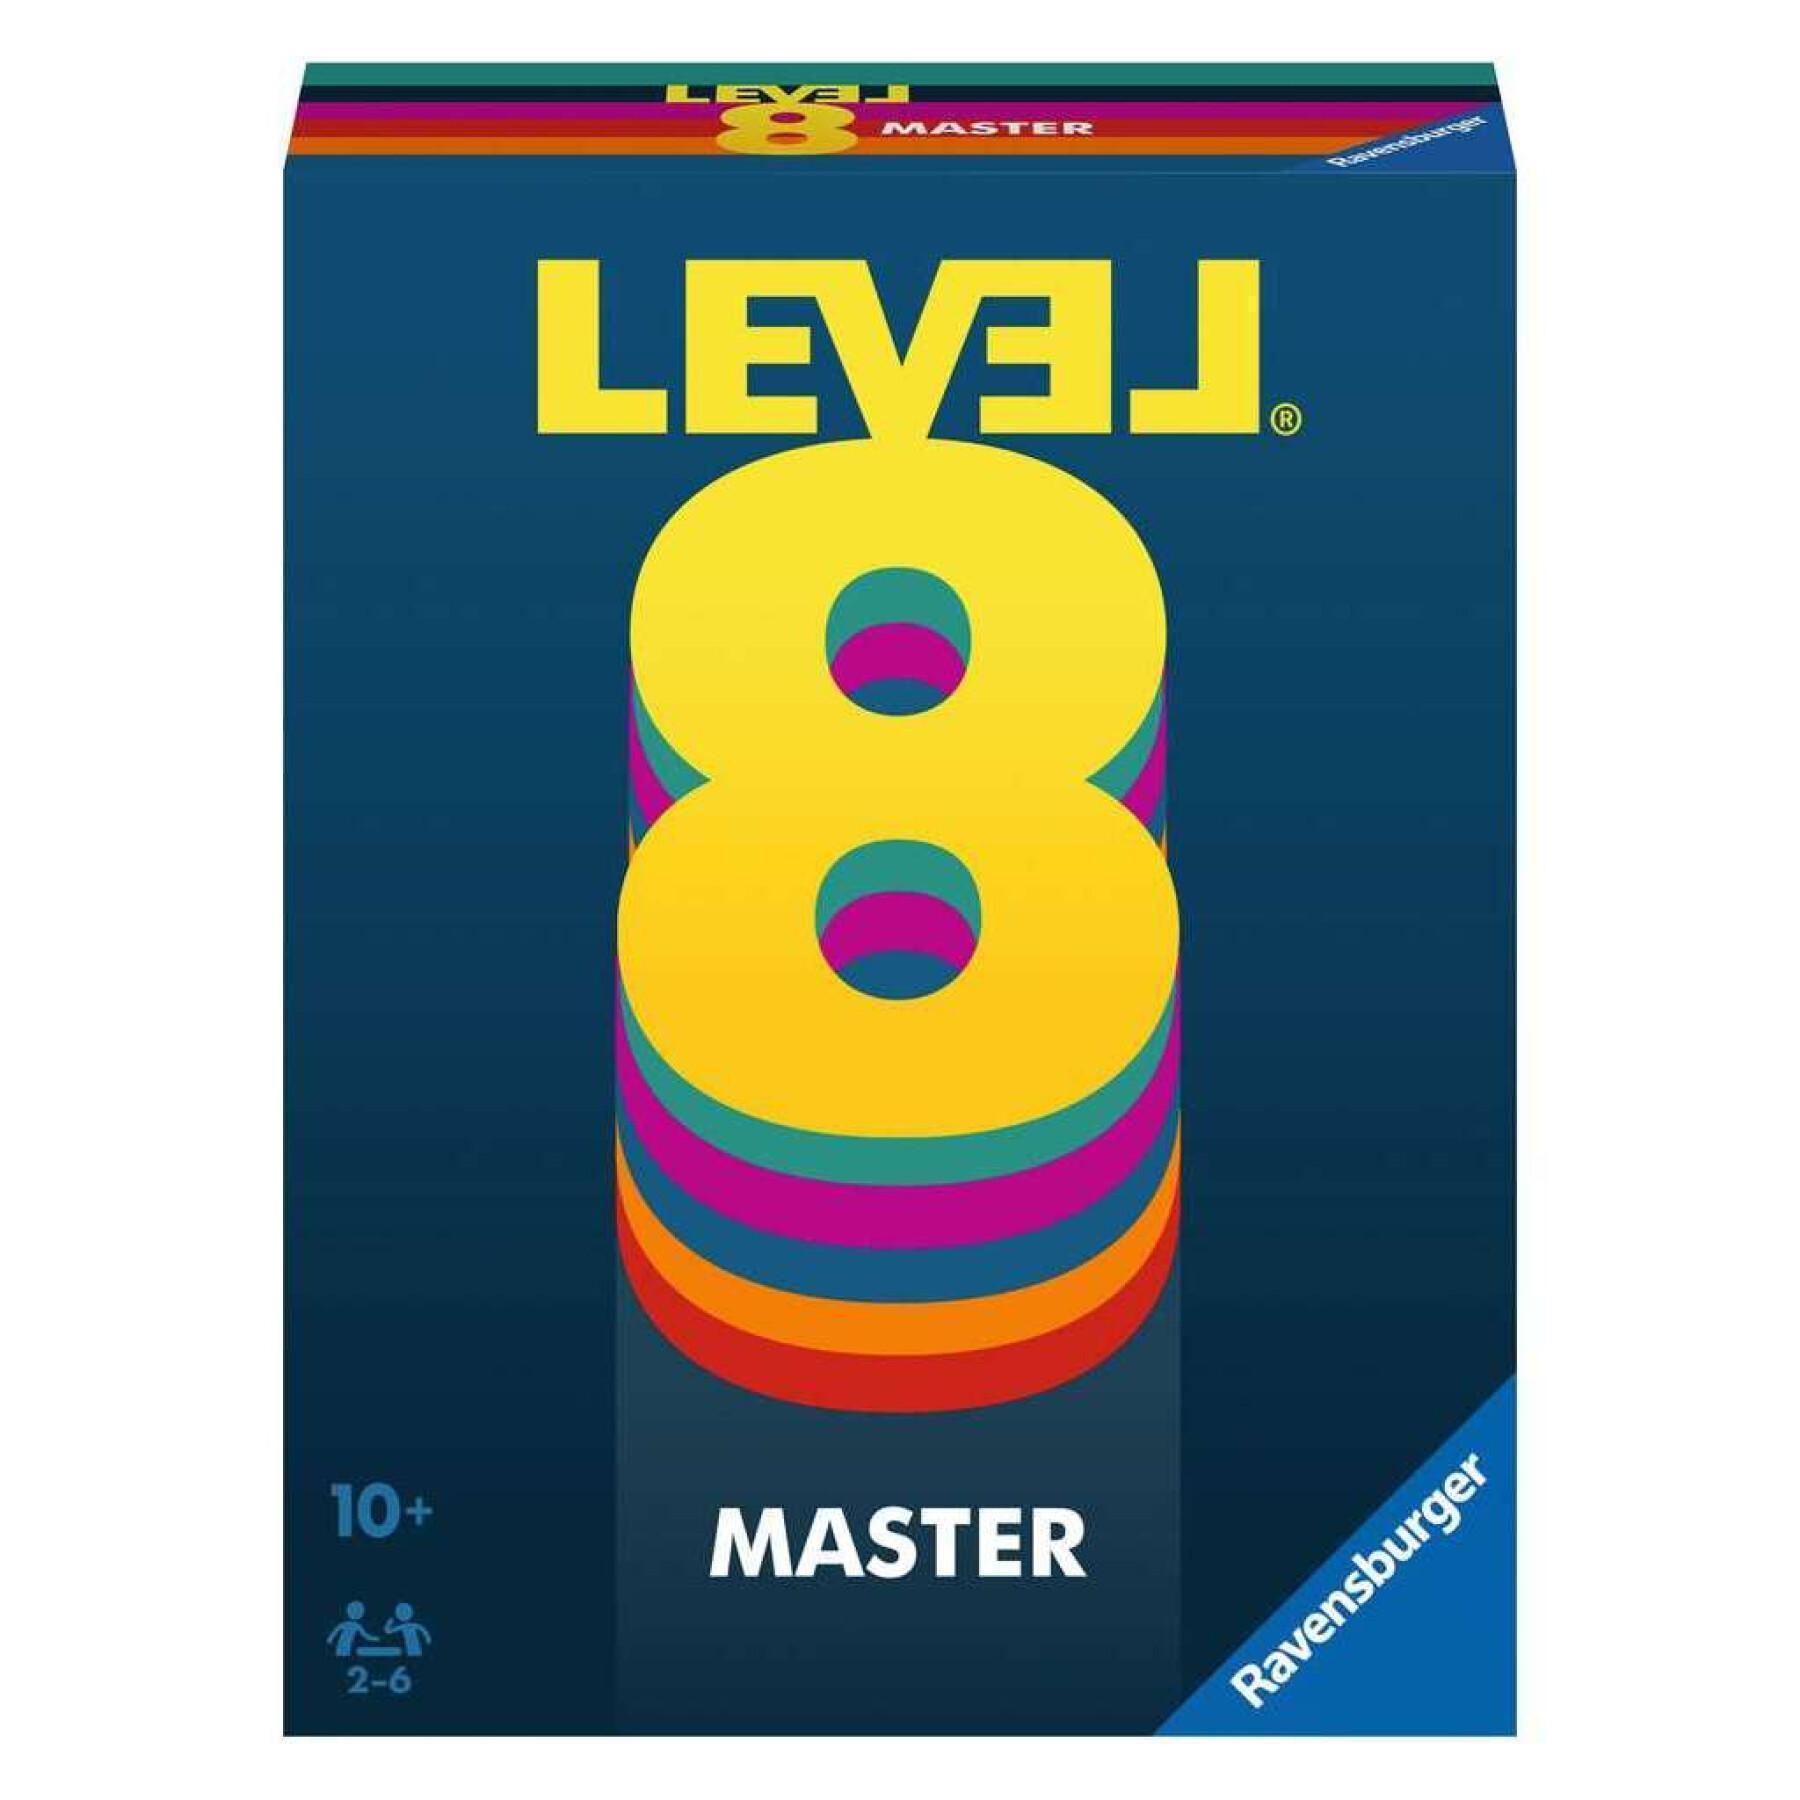 Level 8 master new edition Ravensburger